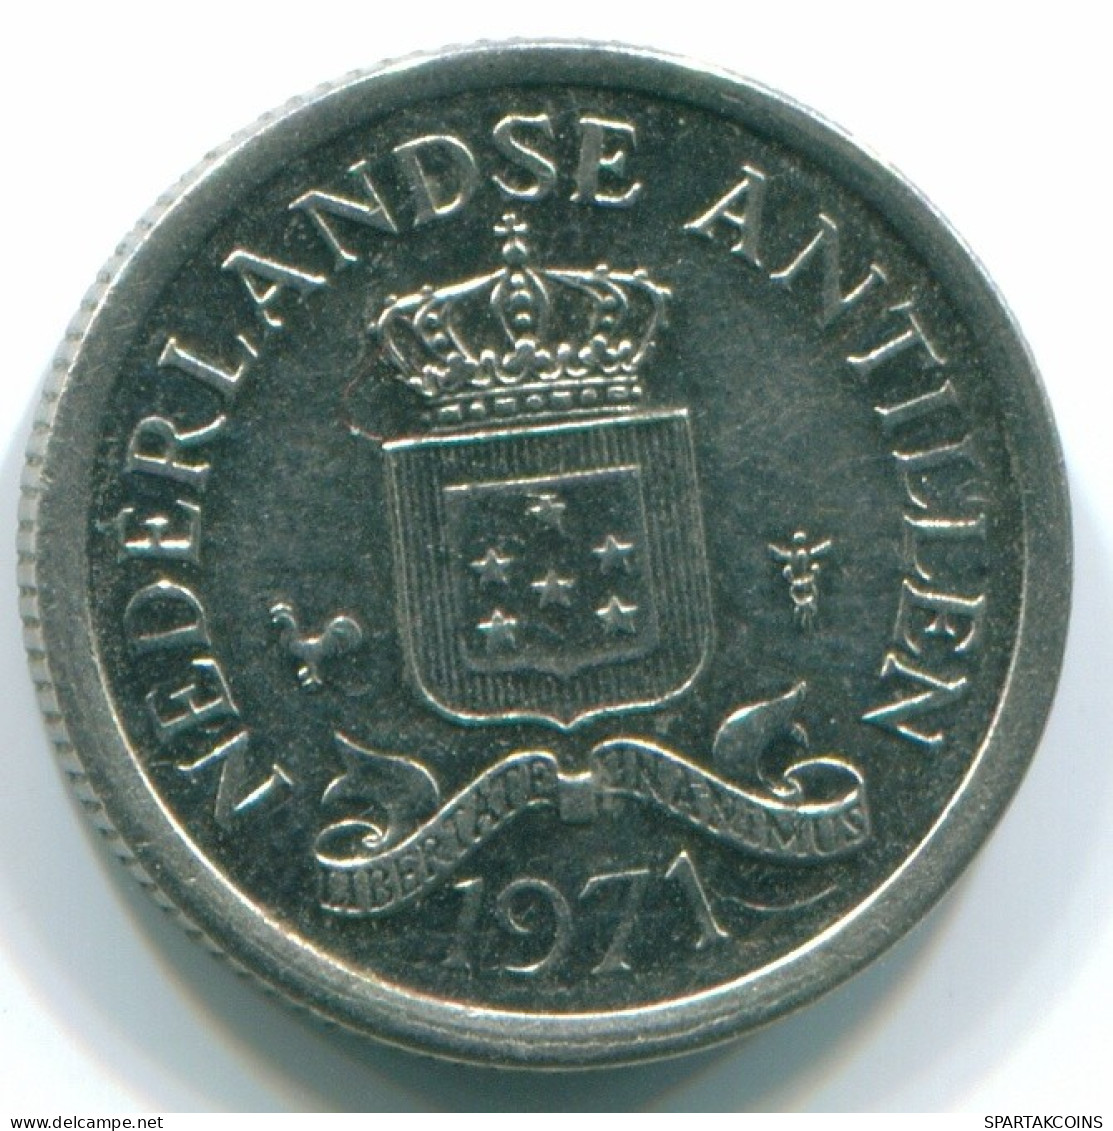 10 CENTS 1971 NETHERLANDS ANTILLES Nickel Colonial Coin #S13428.U.A - Antilles Néerlandaises